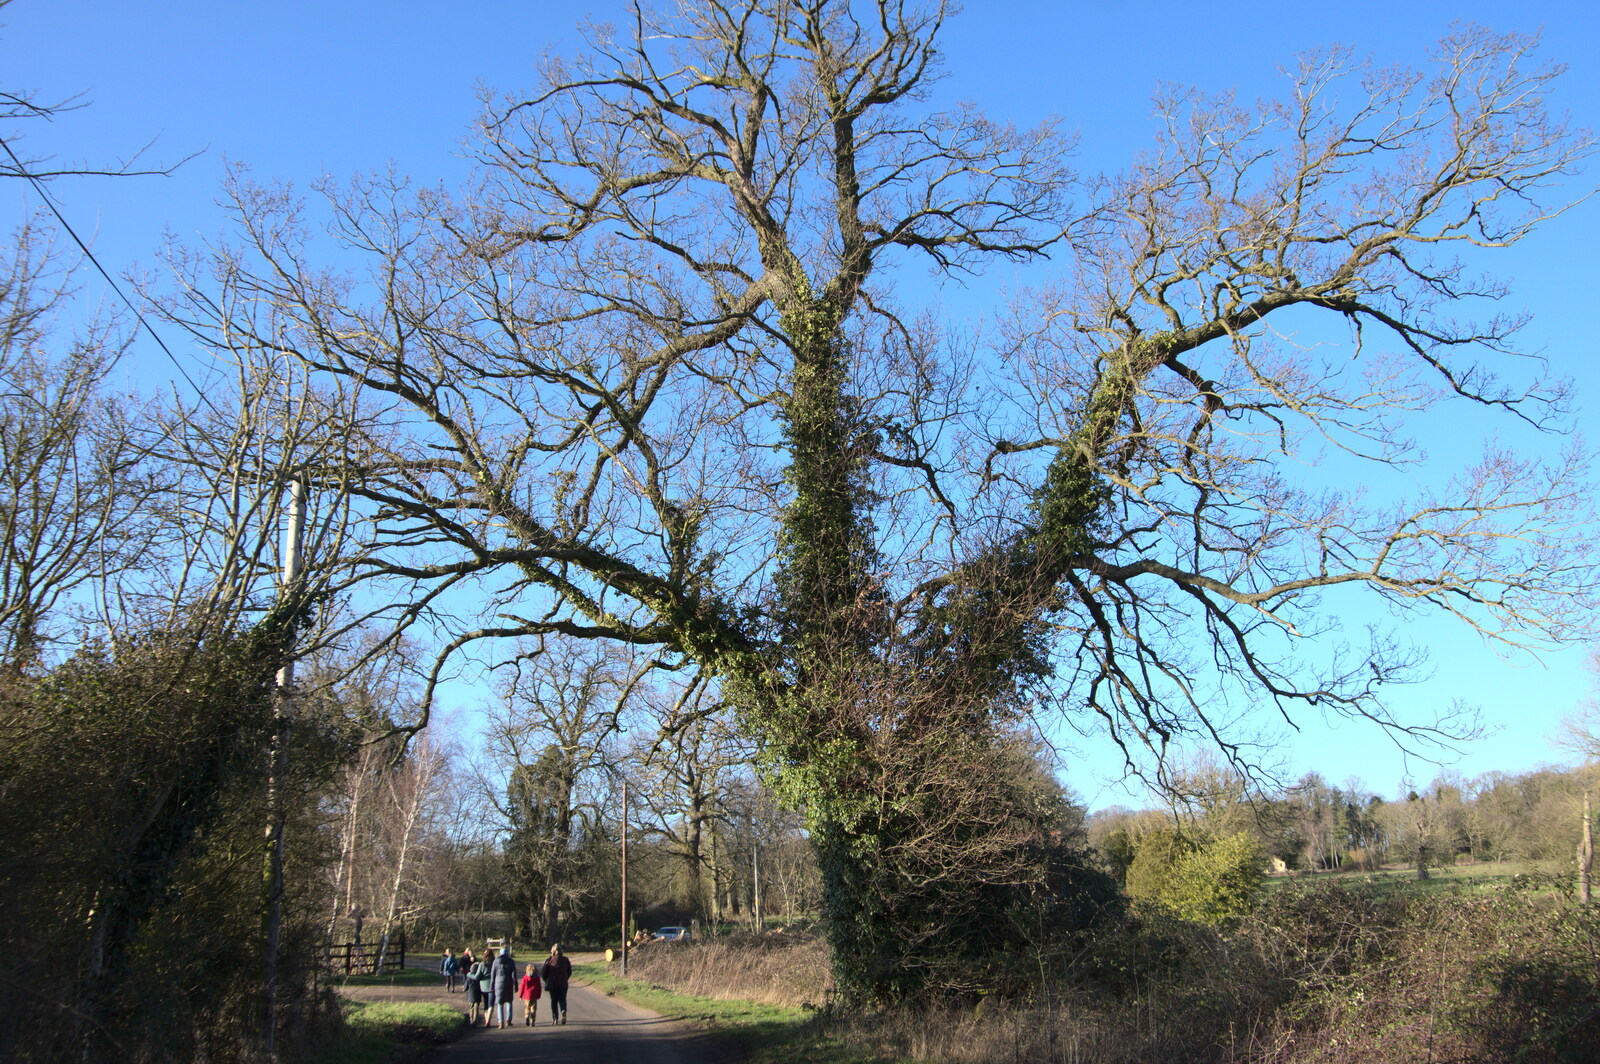 A massive gnarled oak from Snowdrops at Talconeston Hall, Tacolneston, Norfolk - 7th February 2020